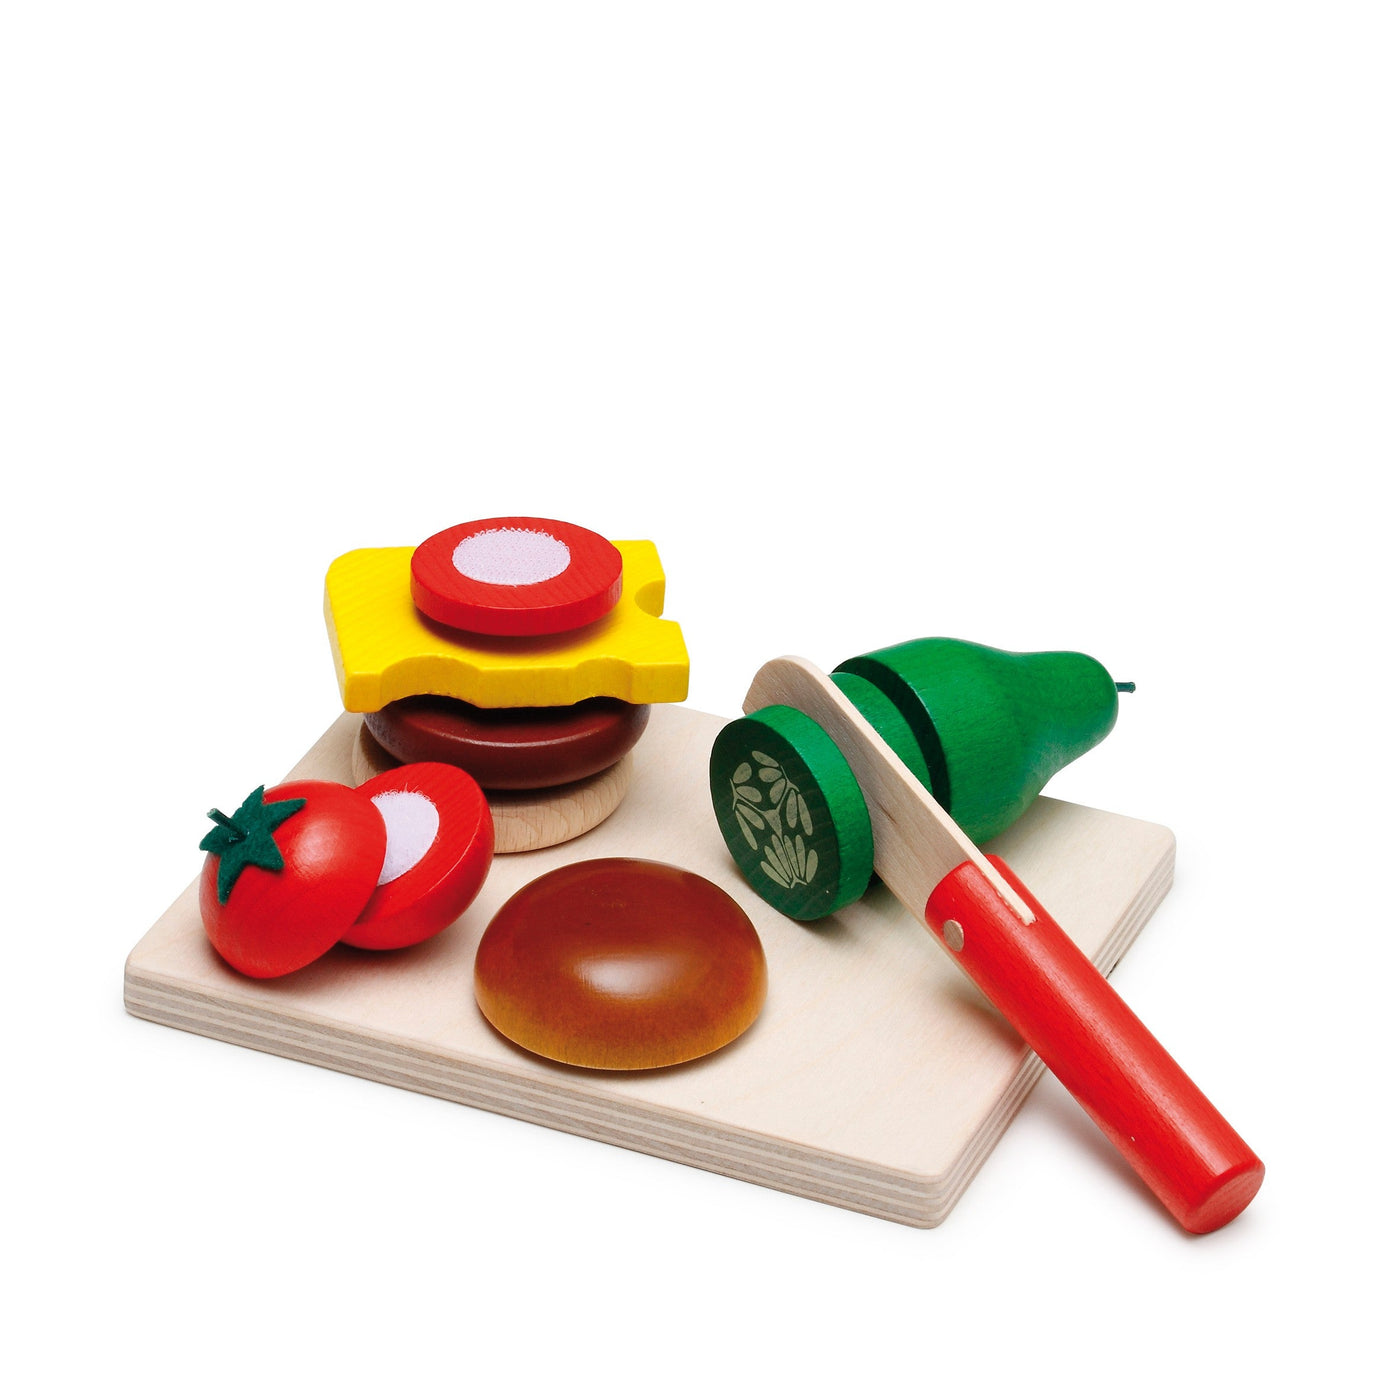 Erzi Cheeseburger Cutting Set - Wooden Play Food